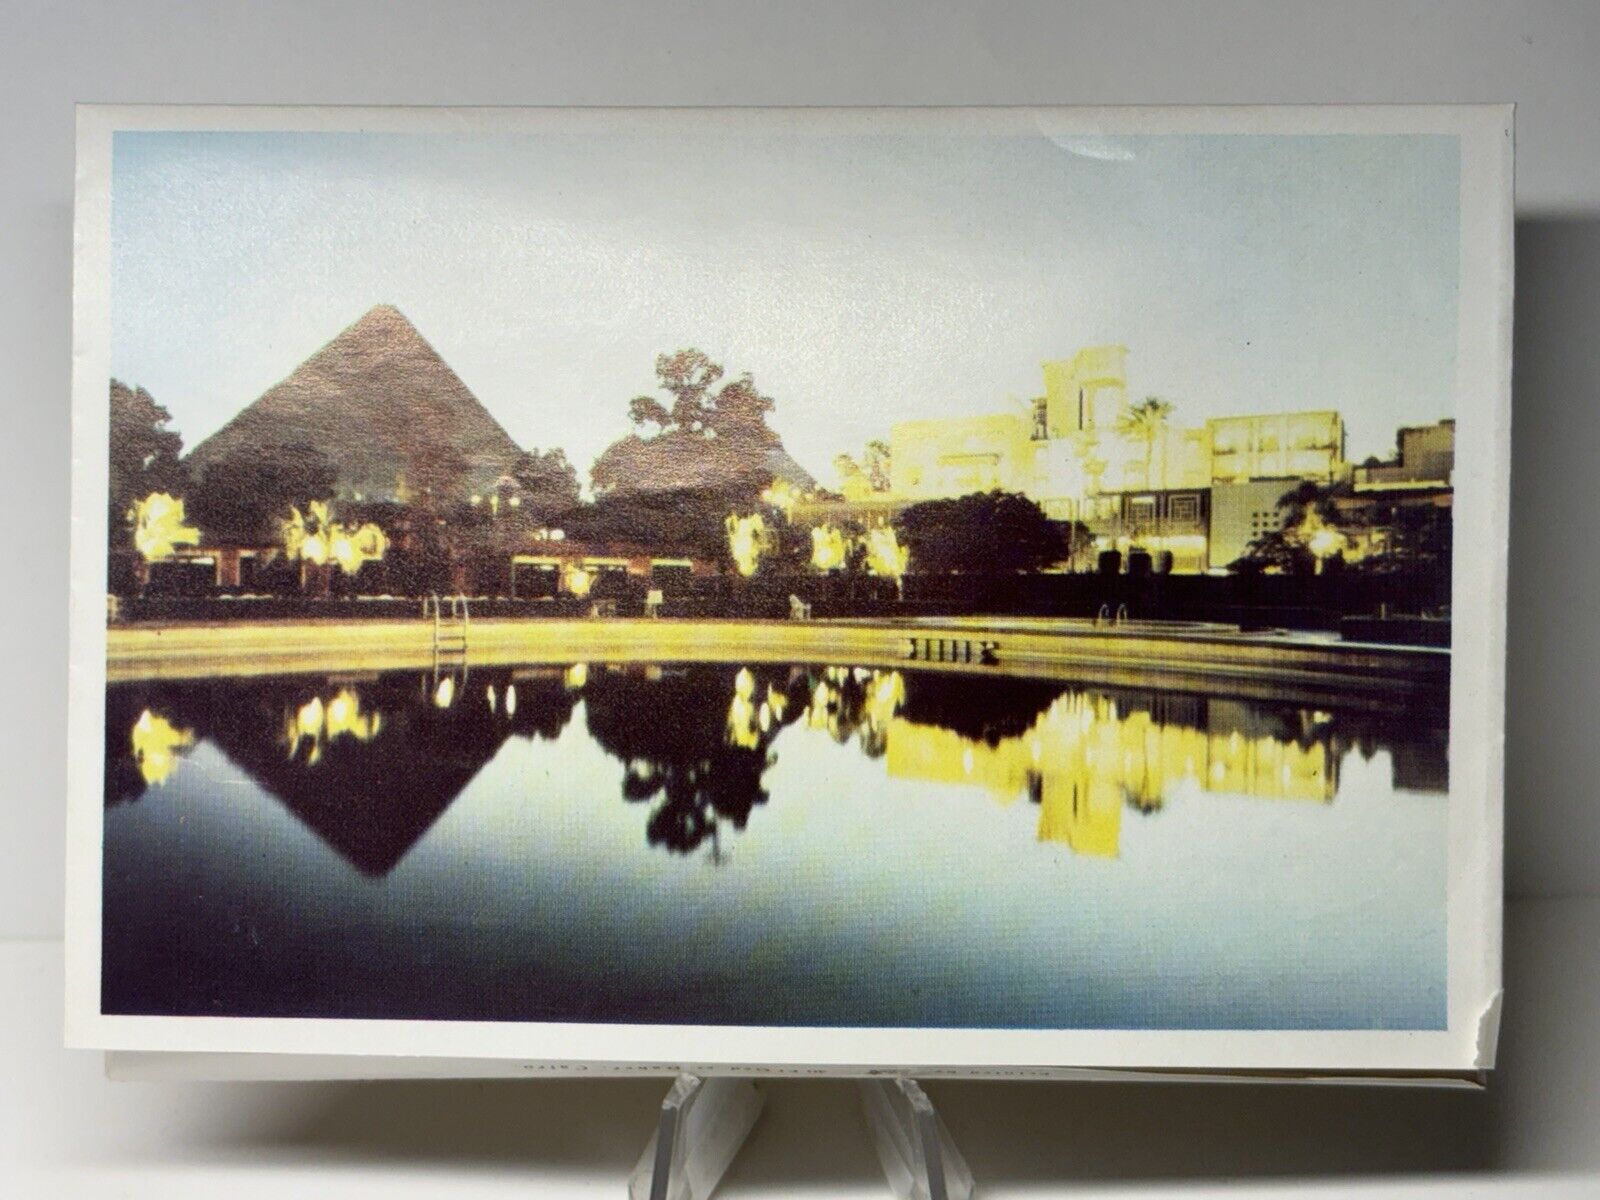 Mena House Hotel CAIRO Egypt Air Mail Advertising Envelope / Post Card Rare VTG